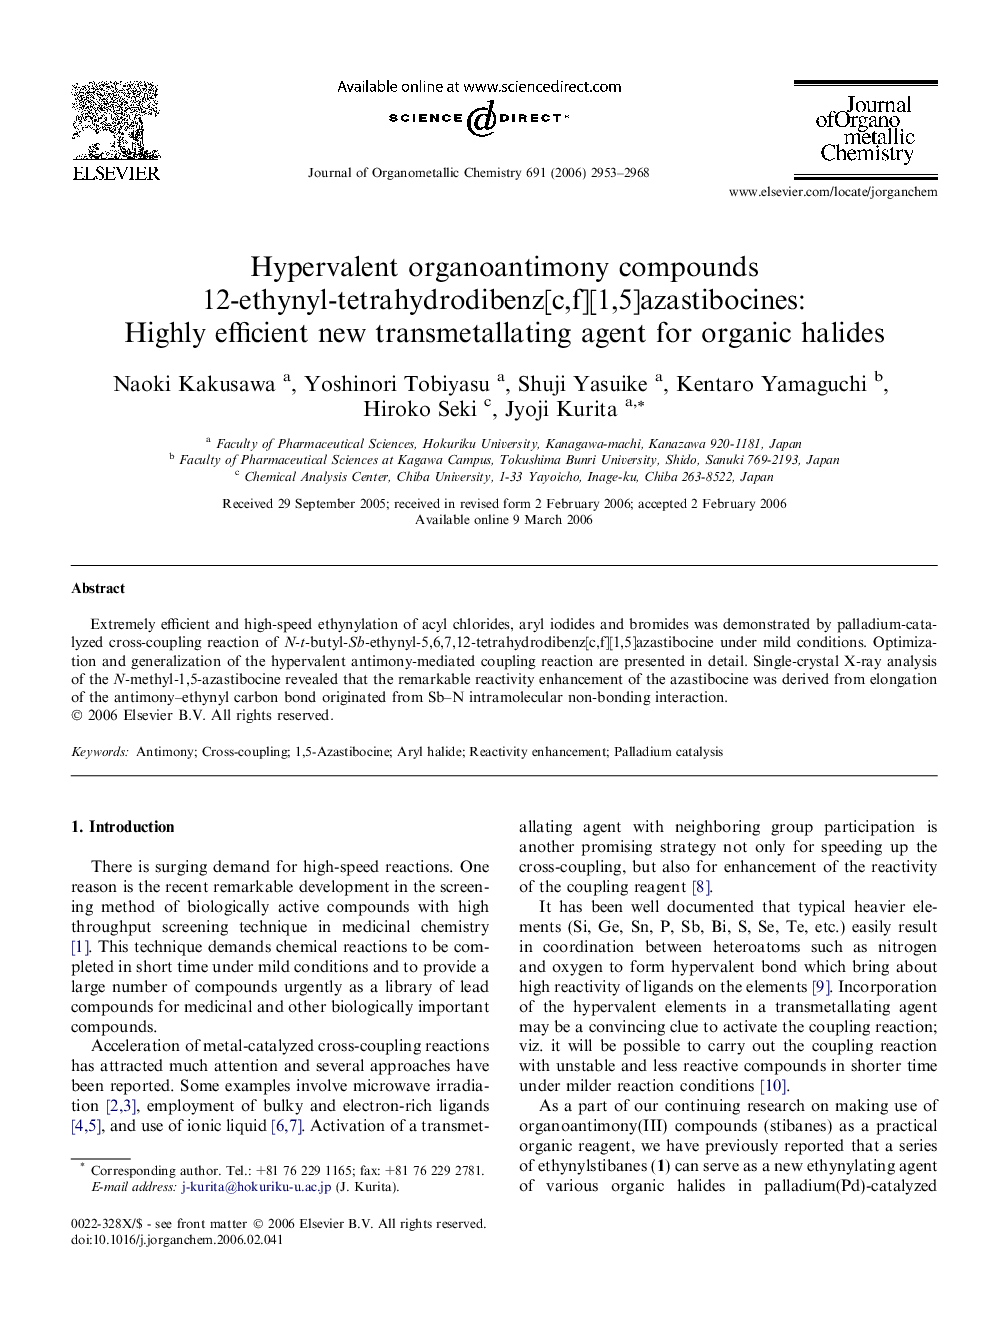 Hypervalent organoantimony compounds 12-ethynyl-tetrahydrodibenz[c,f][1,5]azastibocines: Highly efficient new transmetallating agent for organic halides